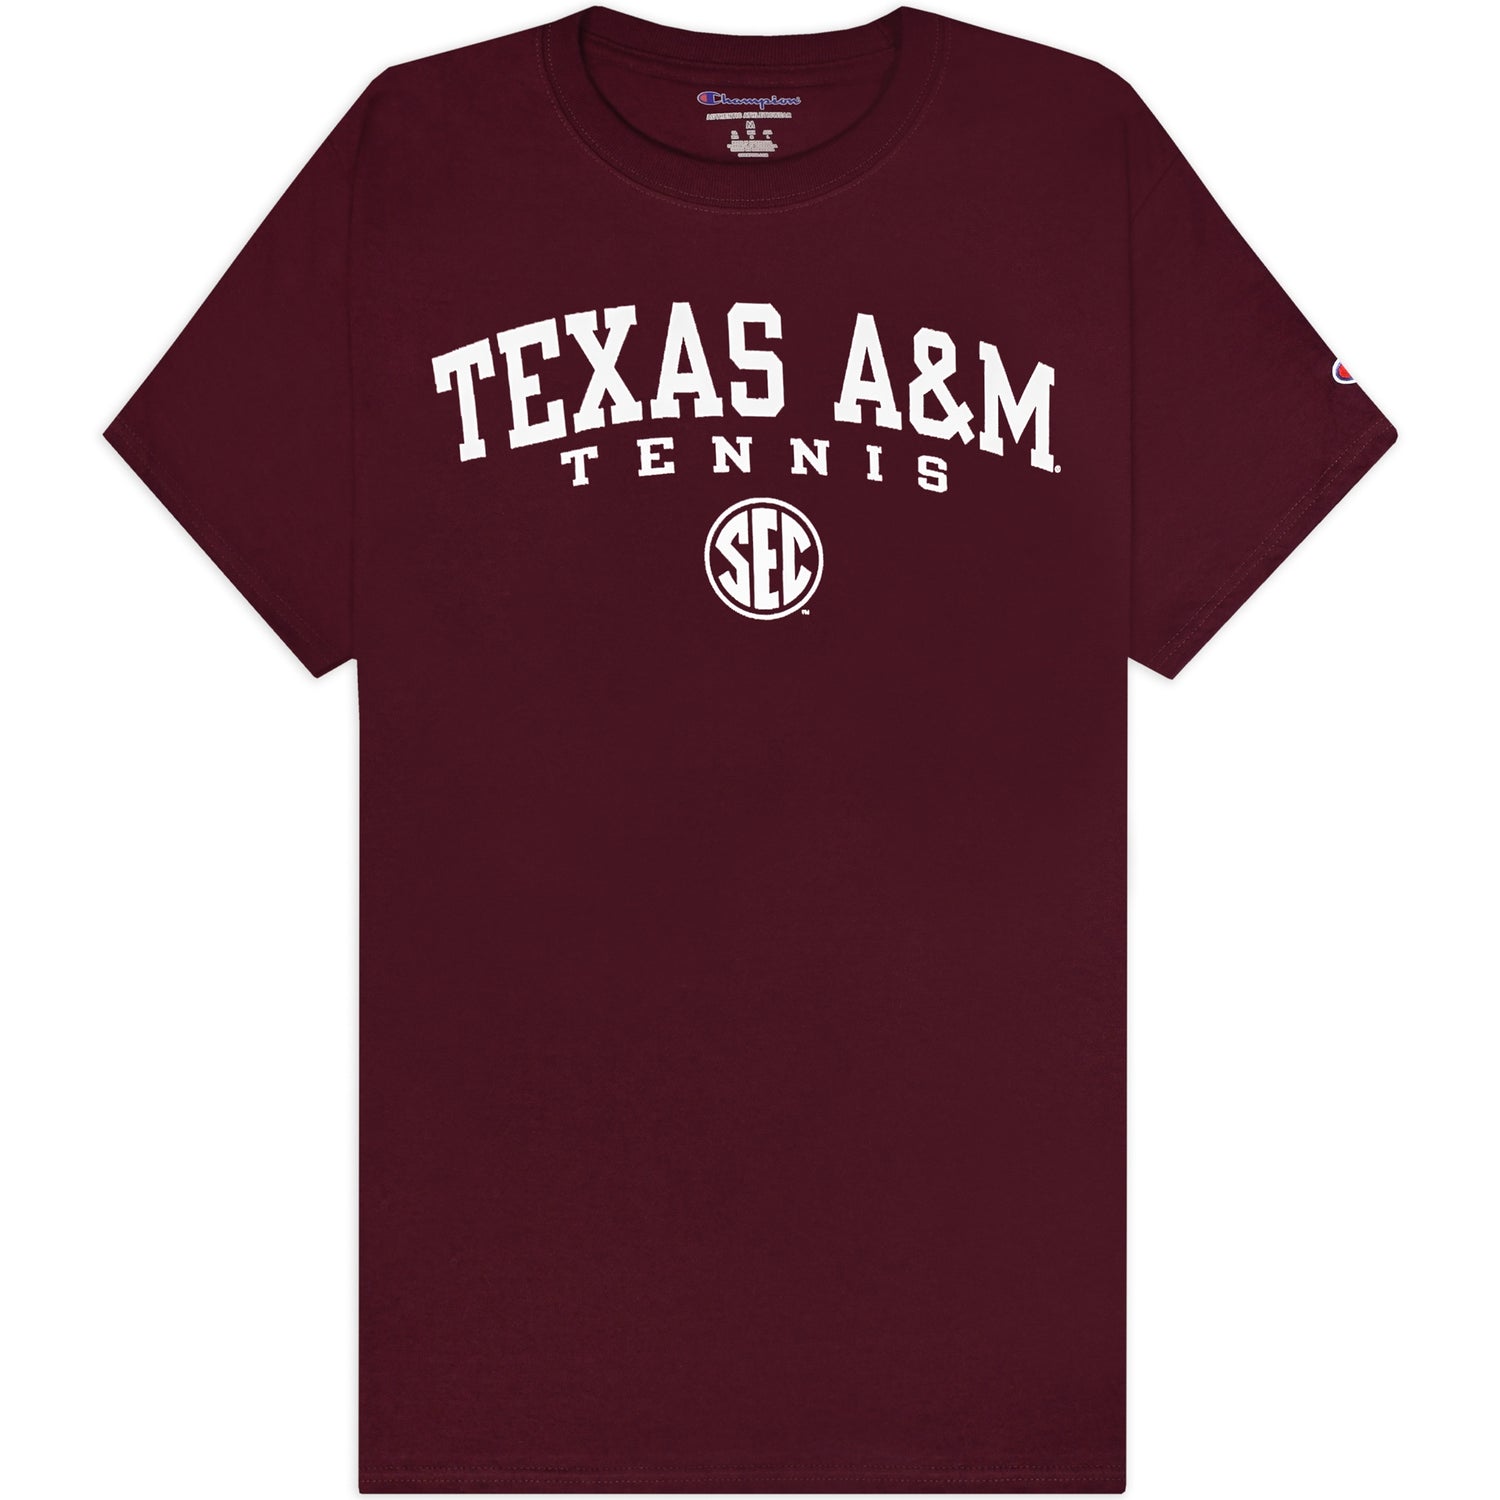 Texas A&M Champion Tennis SEC T-Shirt